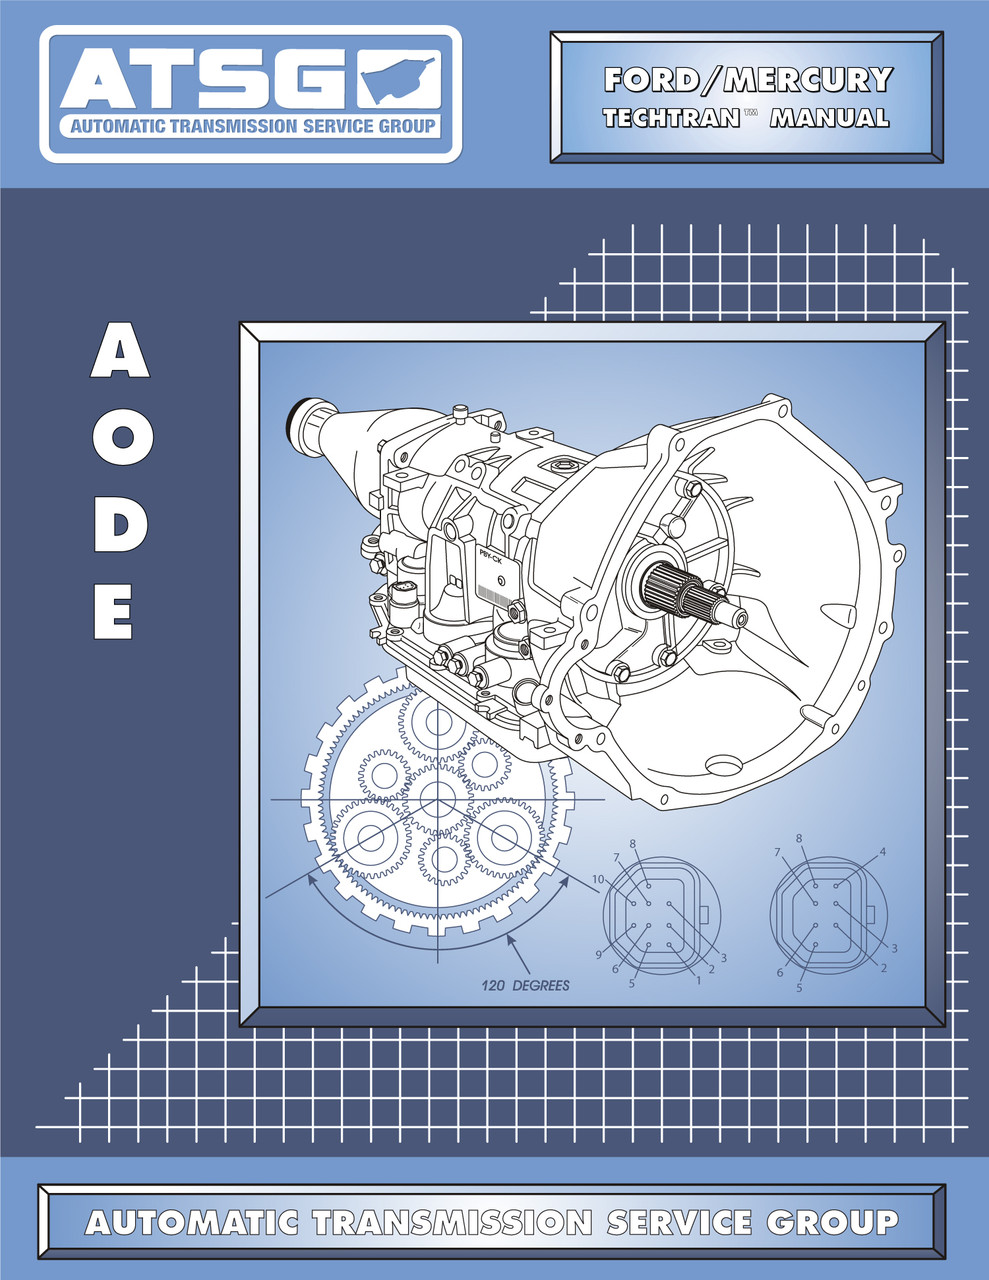 Ford AODE, 4R70W Transmission Rebuild Manual